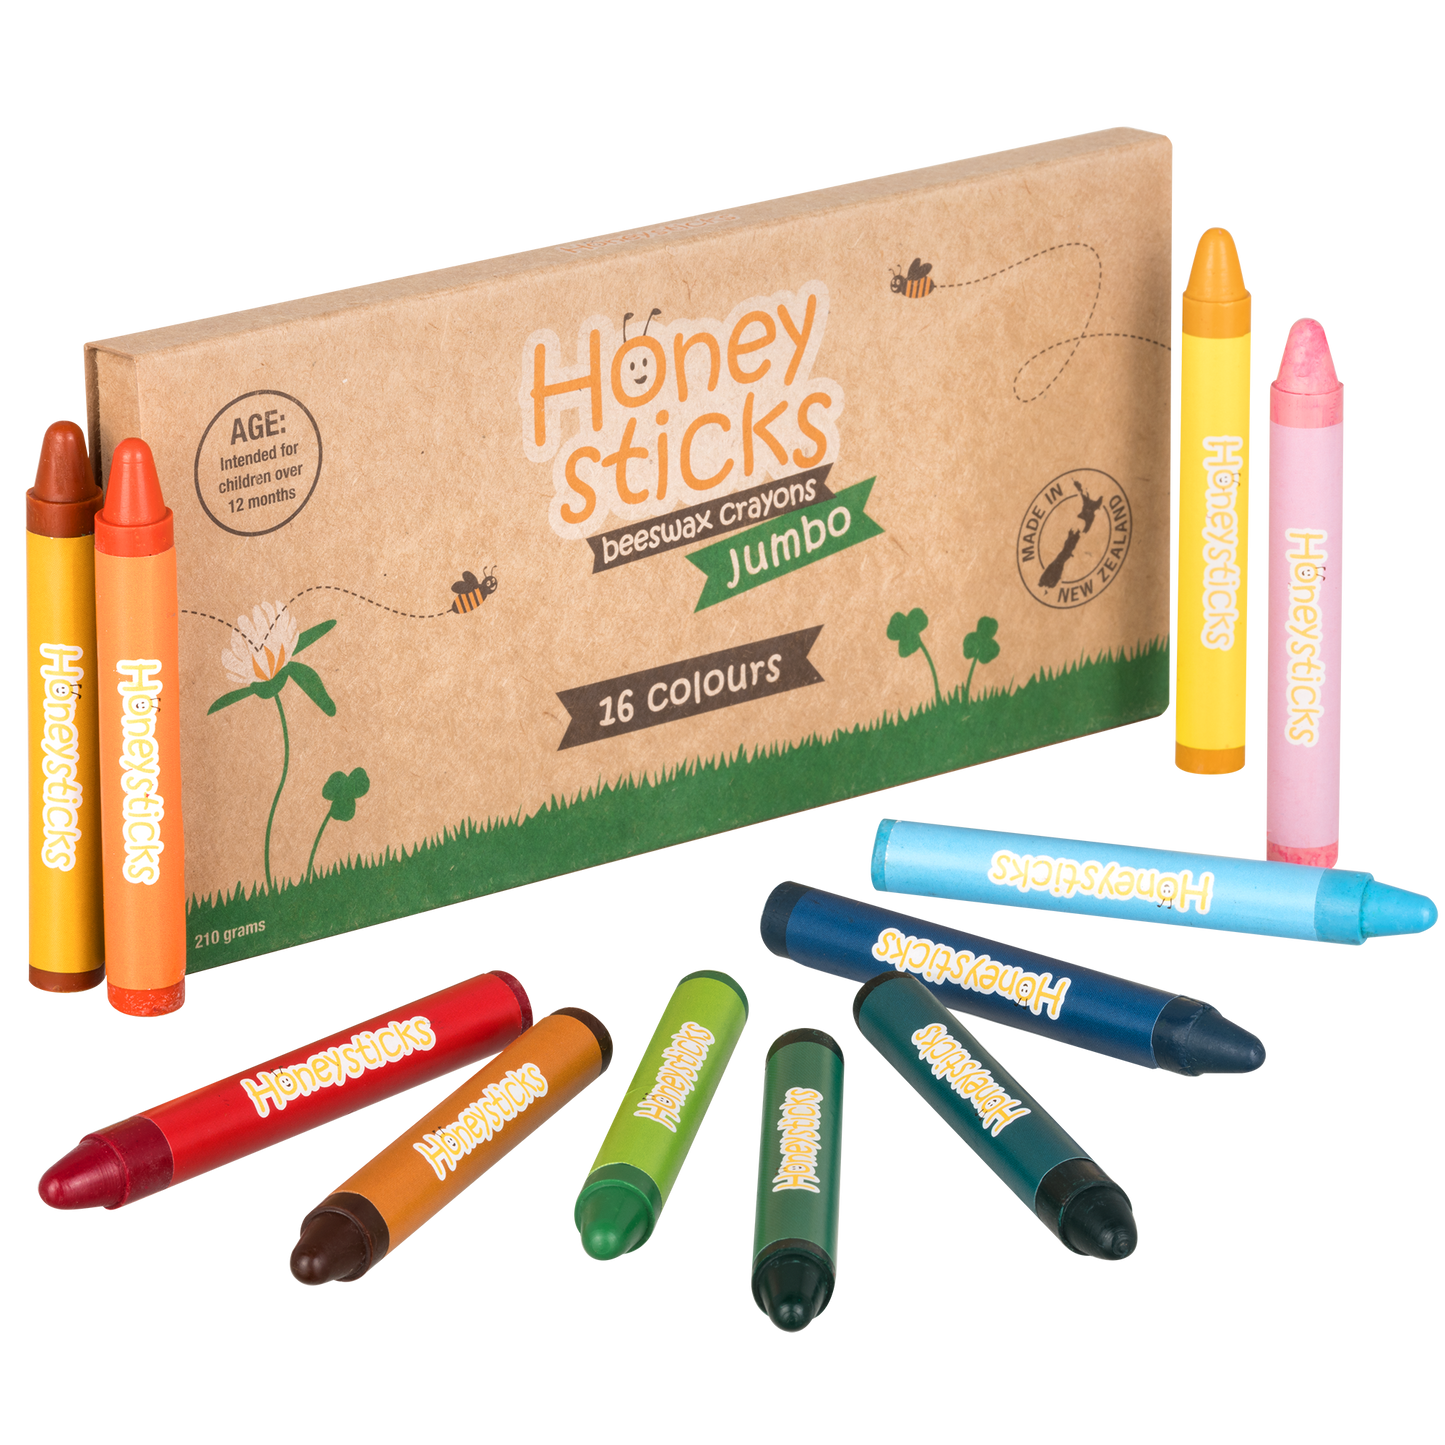 Honeysticks Beeswax Natural Crayones - Jumbo